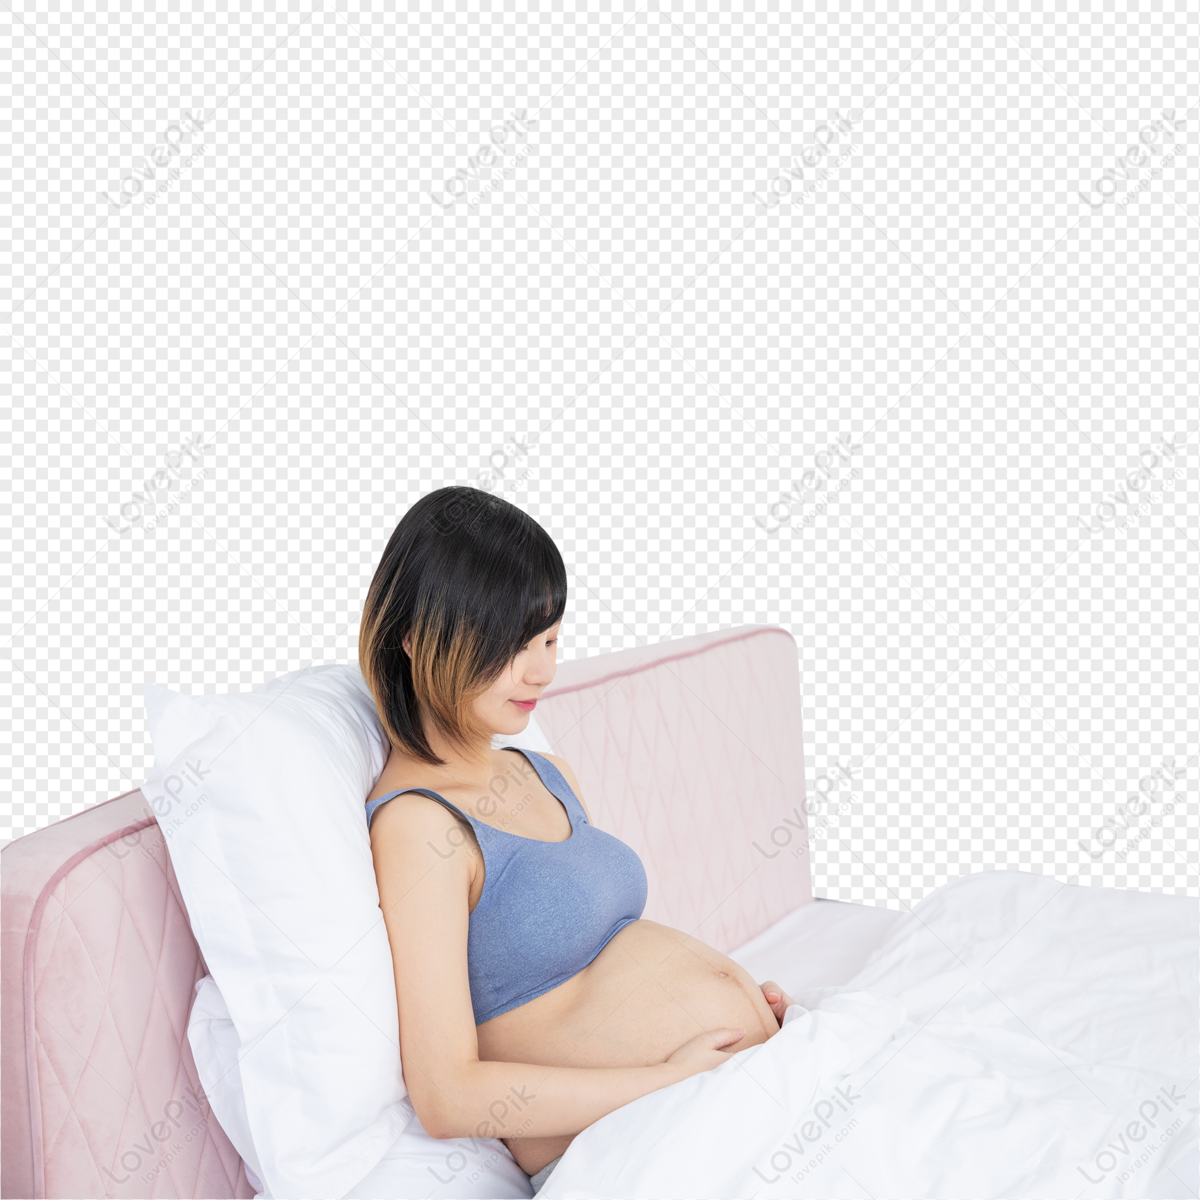 оргазм во сне при беременности опасно ли фото 84